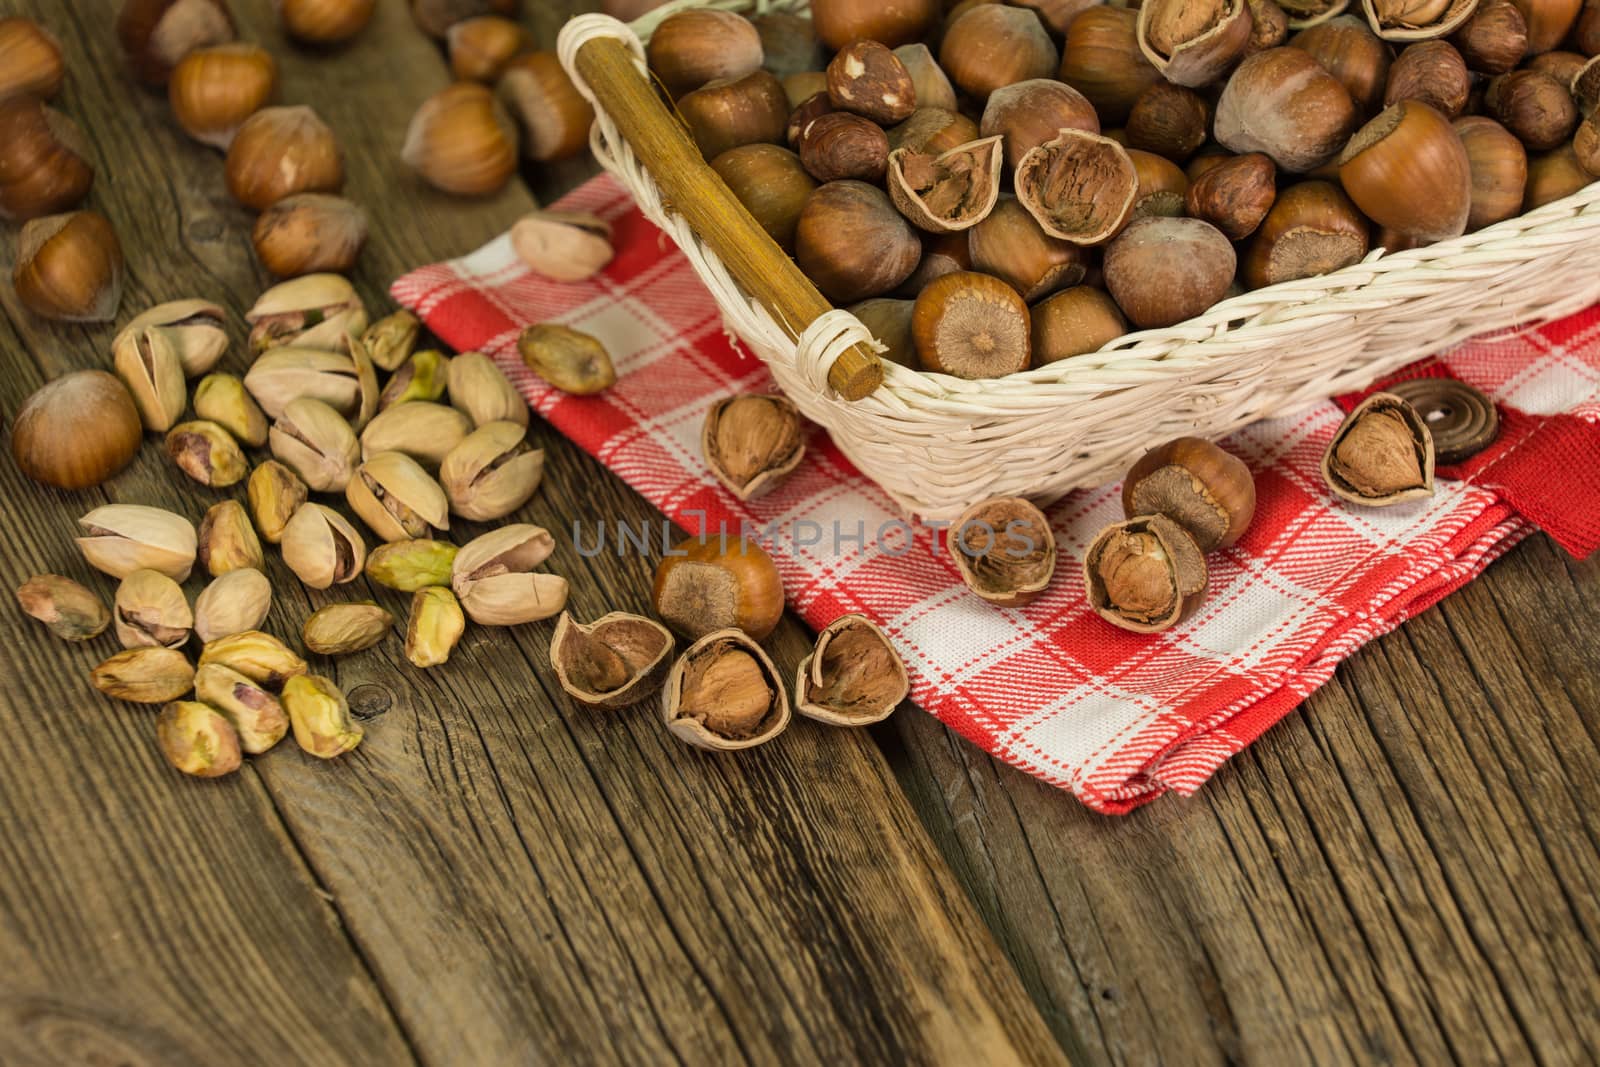 Hazelnuts in small wicker basket, nut mix, selective focus by DGolbay